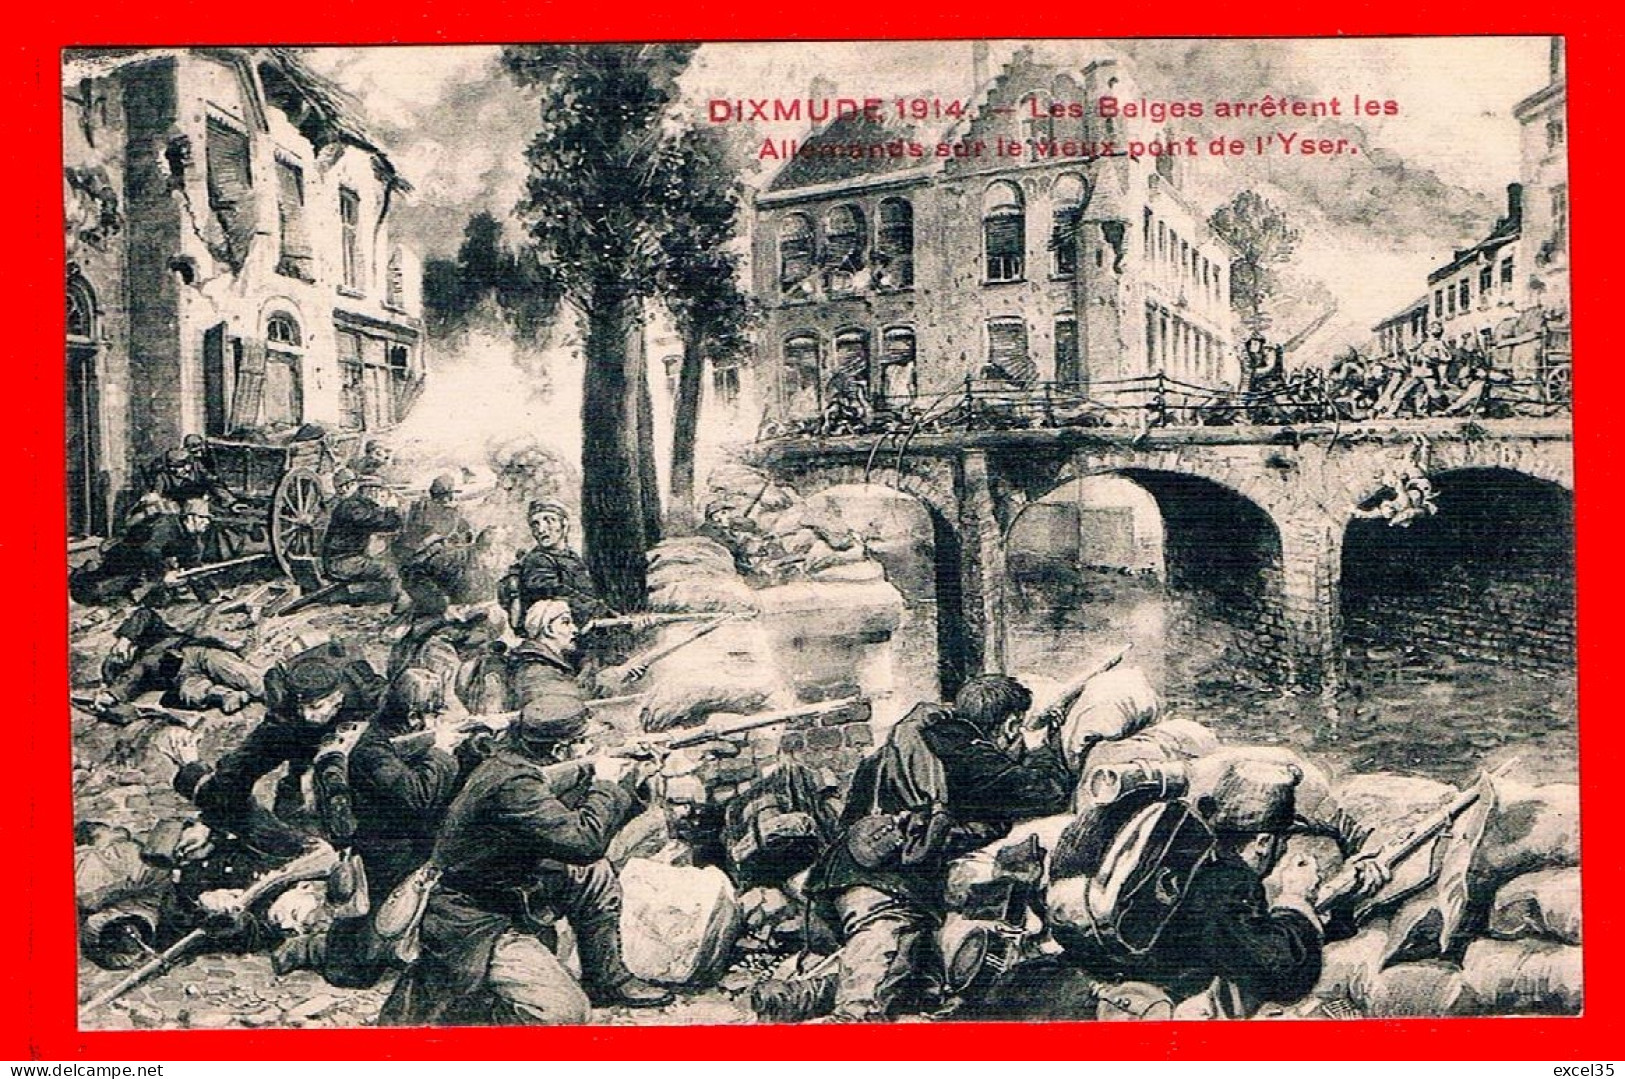 11 CPA TGP NV - BELGIQUE YSER 1914 - Taube Abattue, Train Blindé, Inondation, Etc... LIEGE - DIXMUDE - HAELEN - LA PANNE - Sammlungen & Sammellose